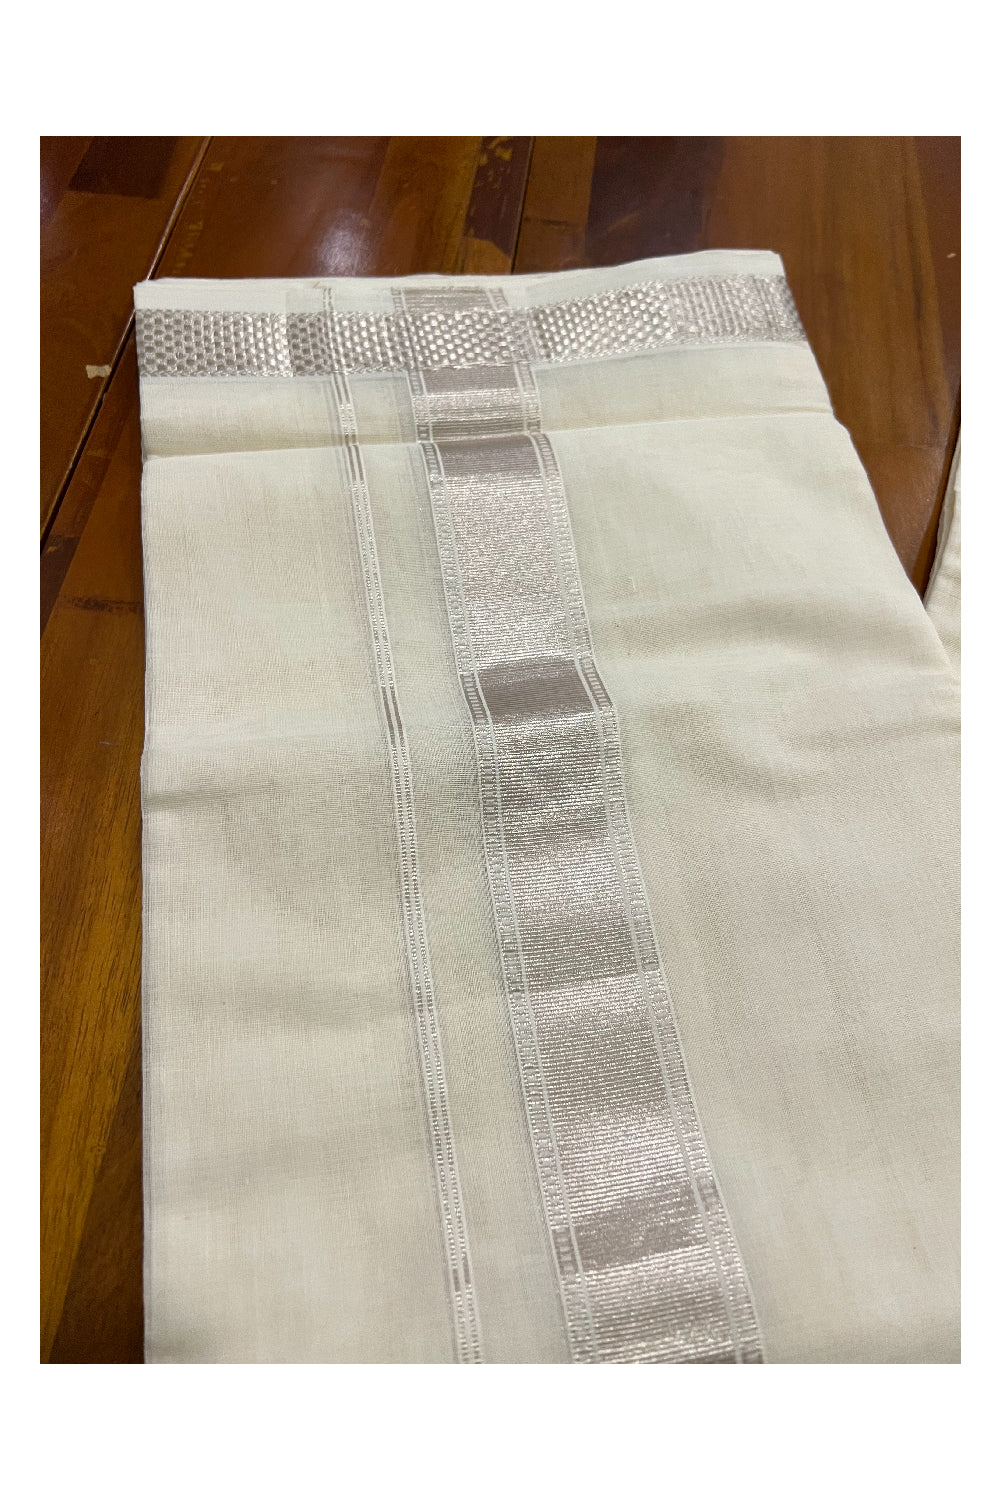 Southloom Kuthampully Handloom Pure Cotton Mundu with Silver Kasavu Designer Border (South Indian Dhoti)